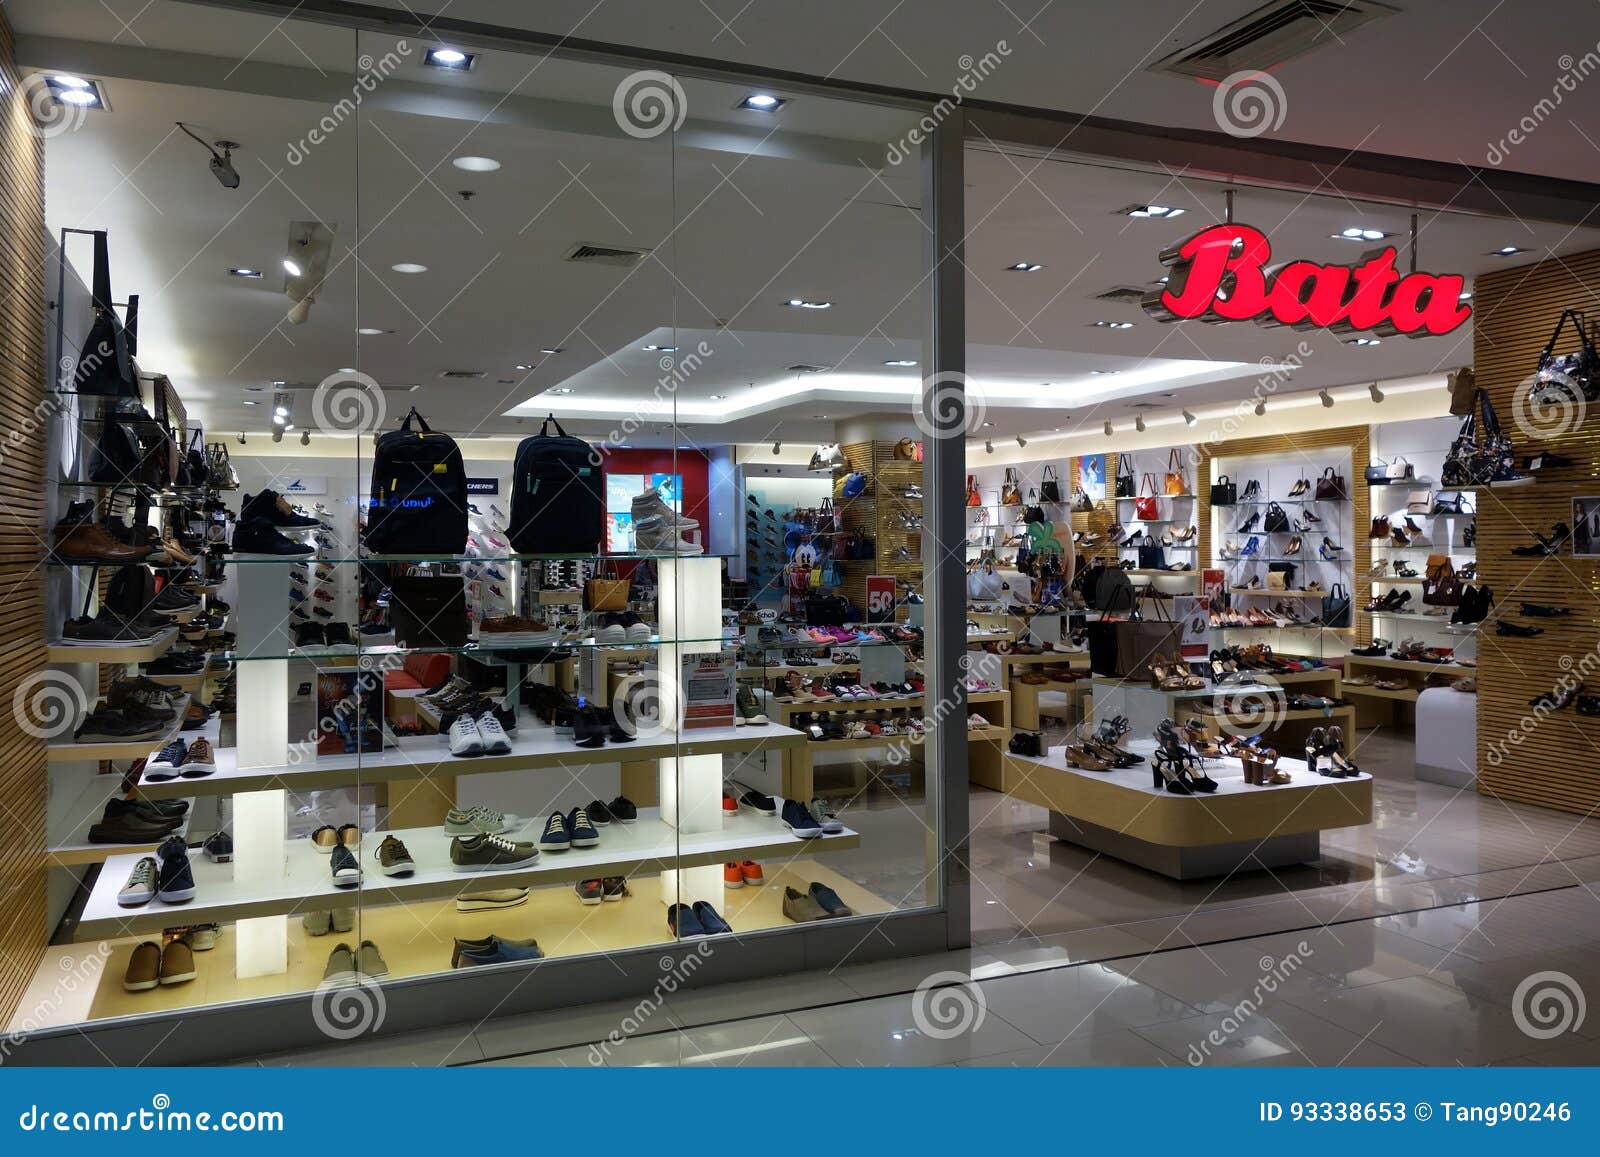 Bata fashion shoes store editorial 